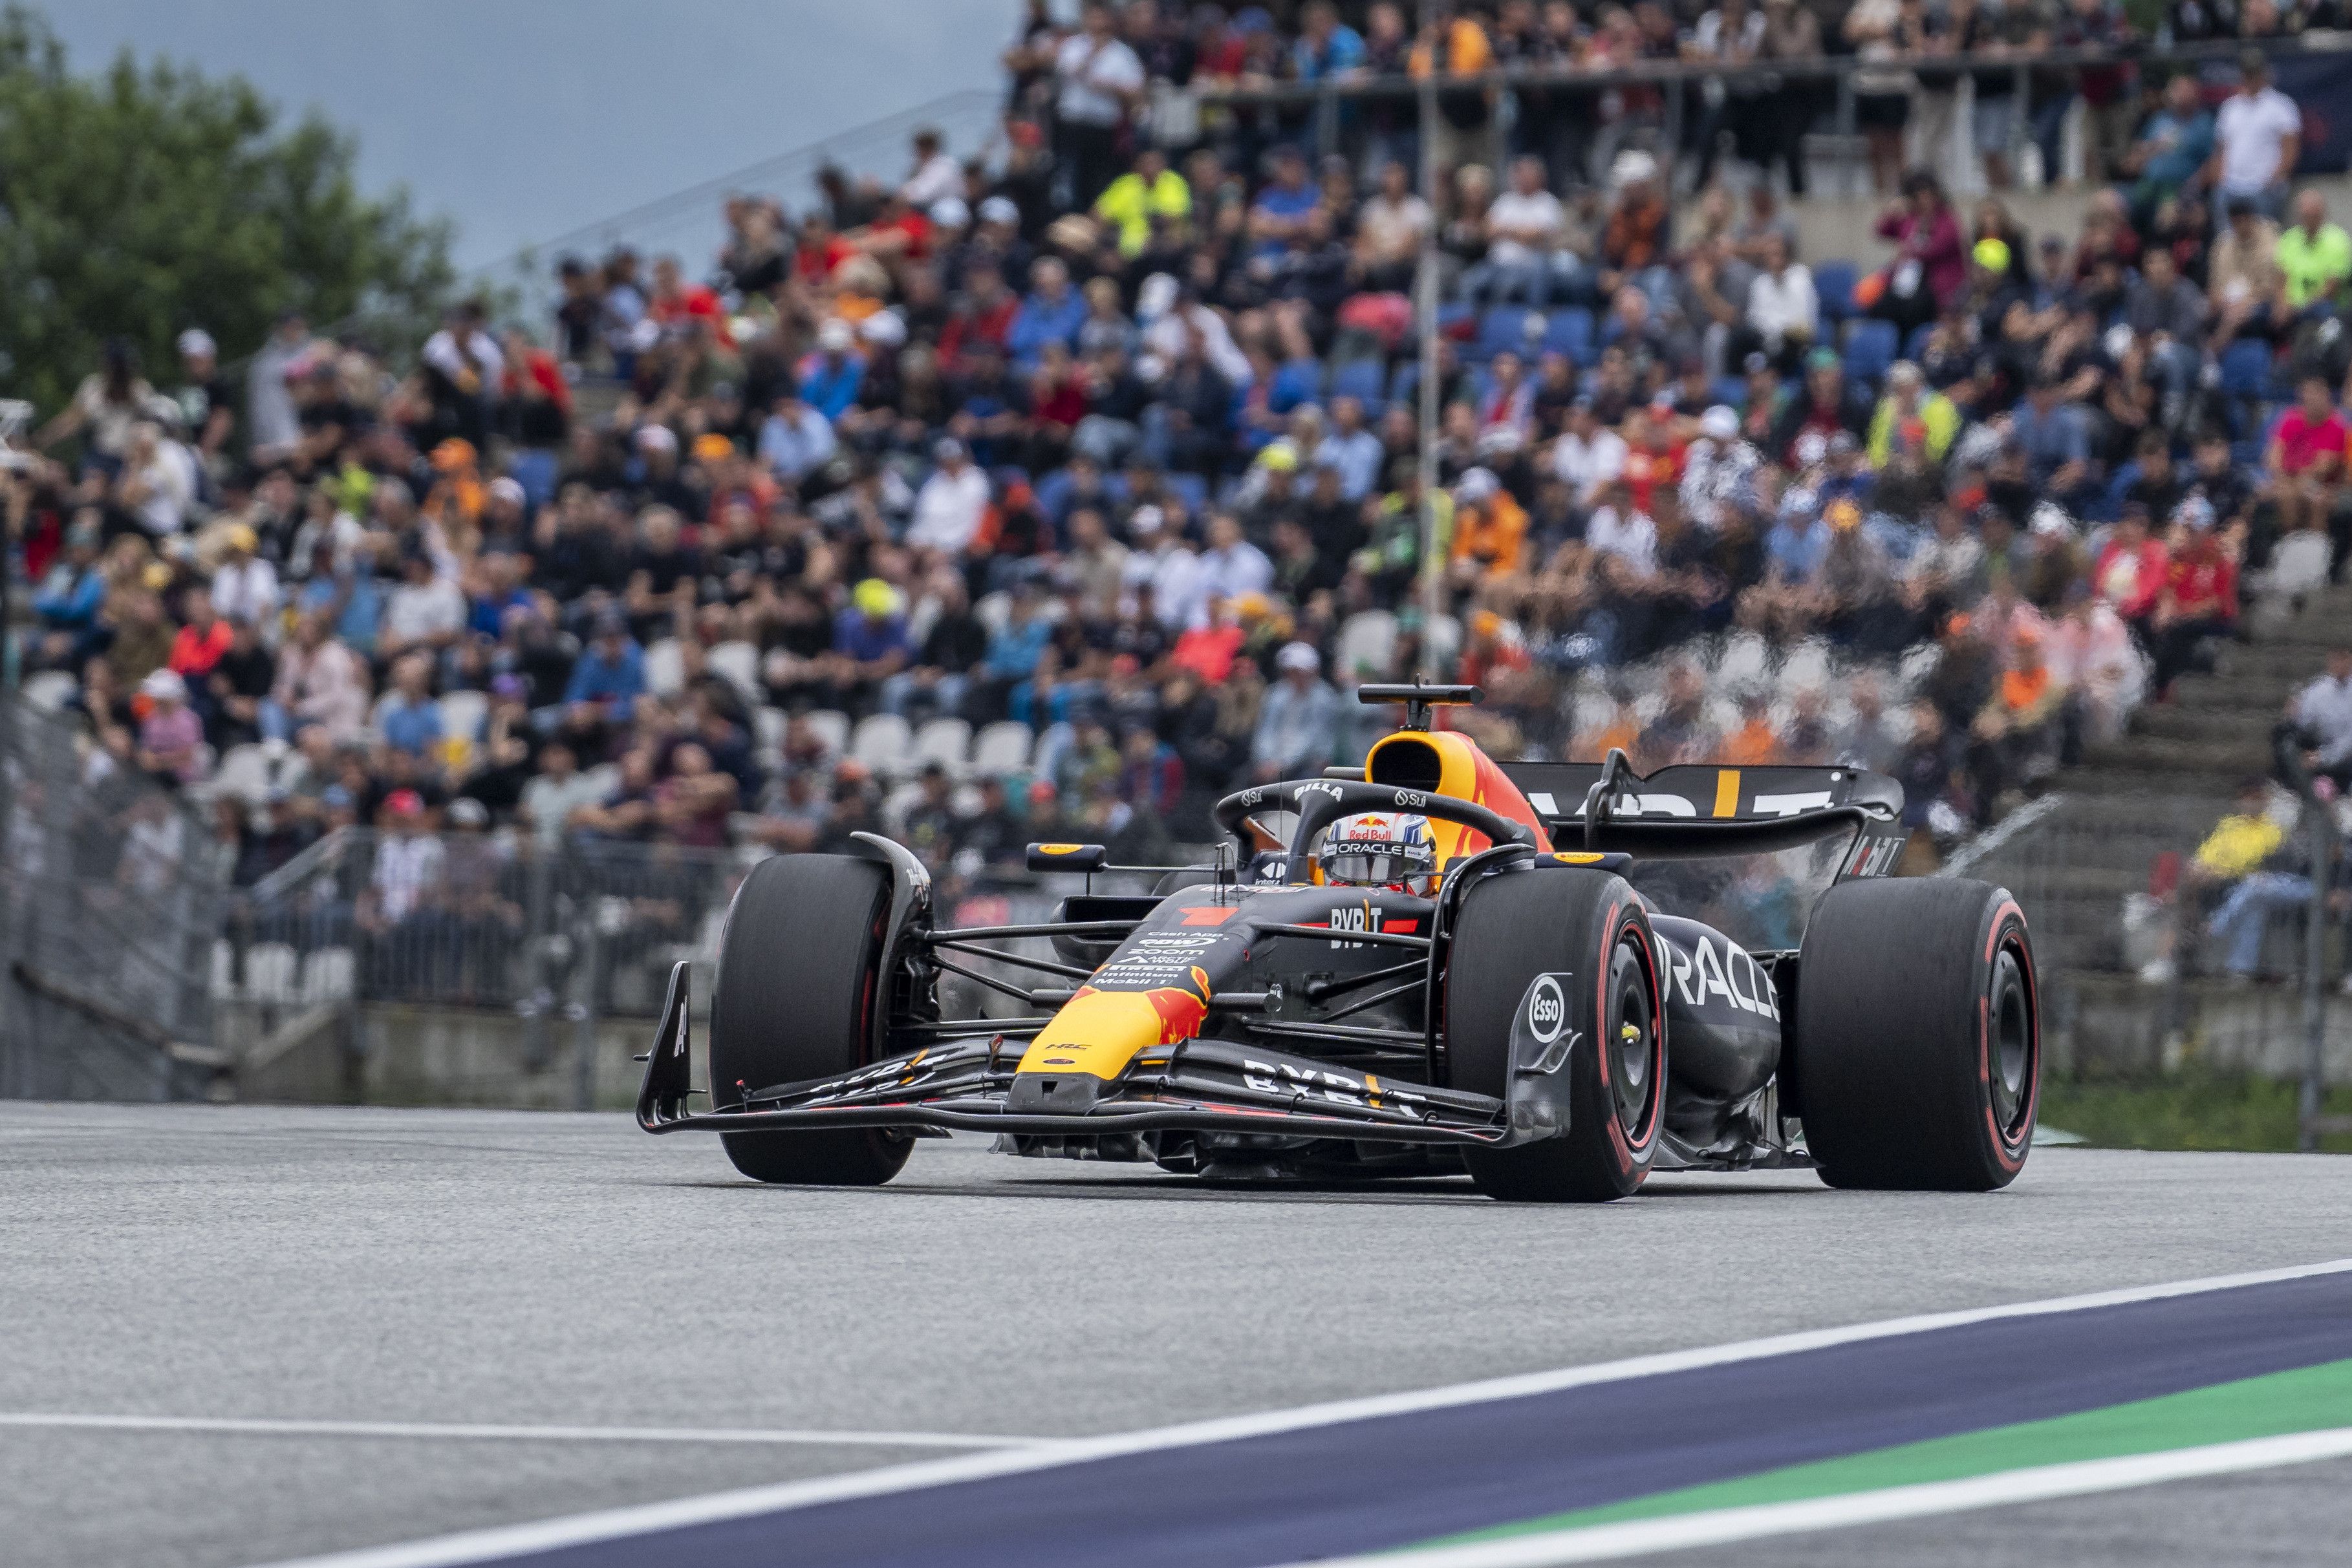 Supreme Max Verstappen Glides to F1 Sprint Win in Austria